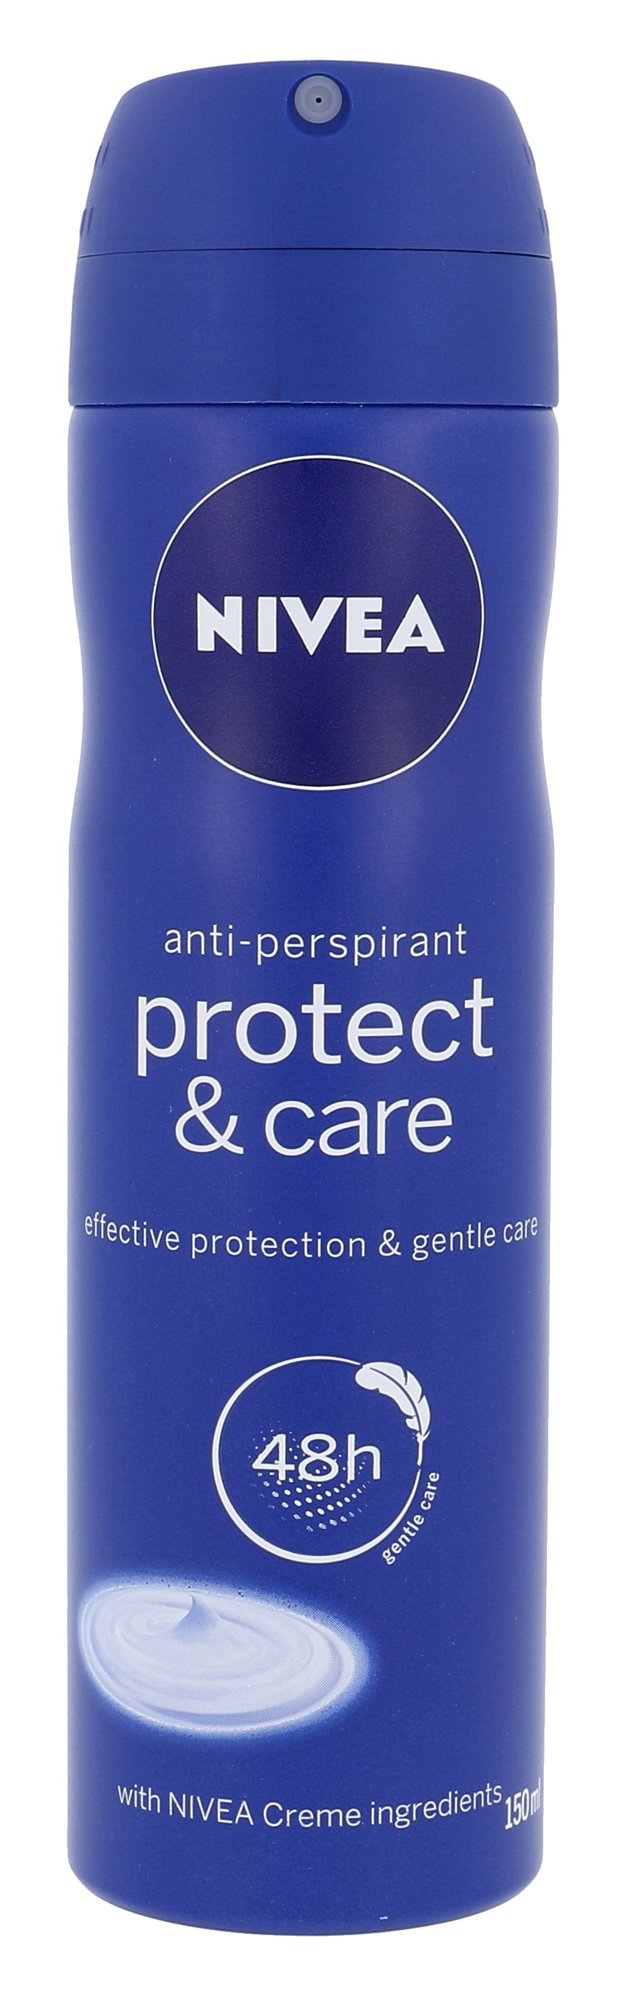 Nivea Protect & Care 48H Anti-perspirant  Deodorant